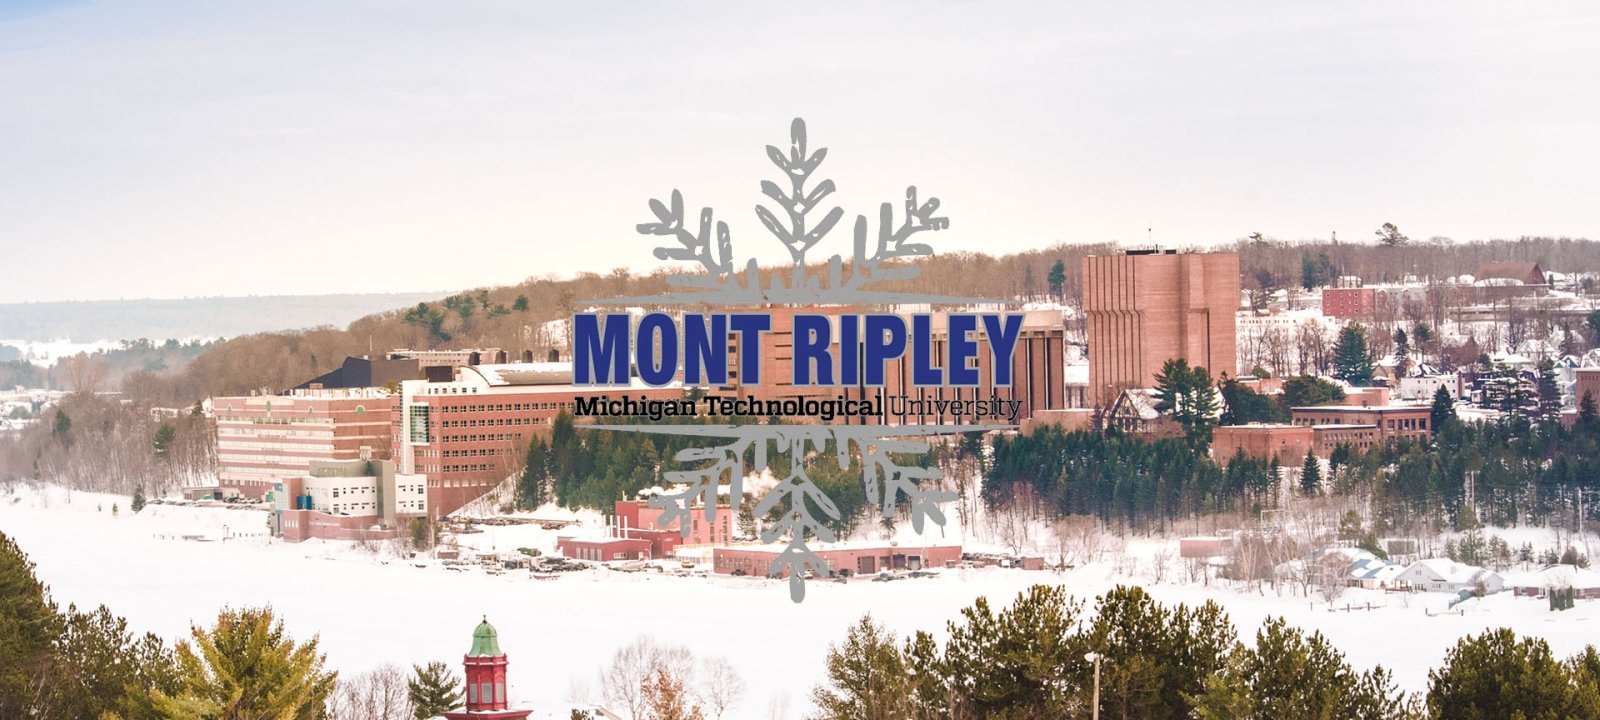 Michigan Tech University from Mont Ripley